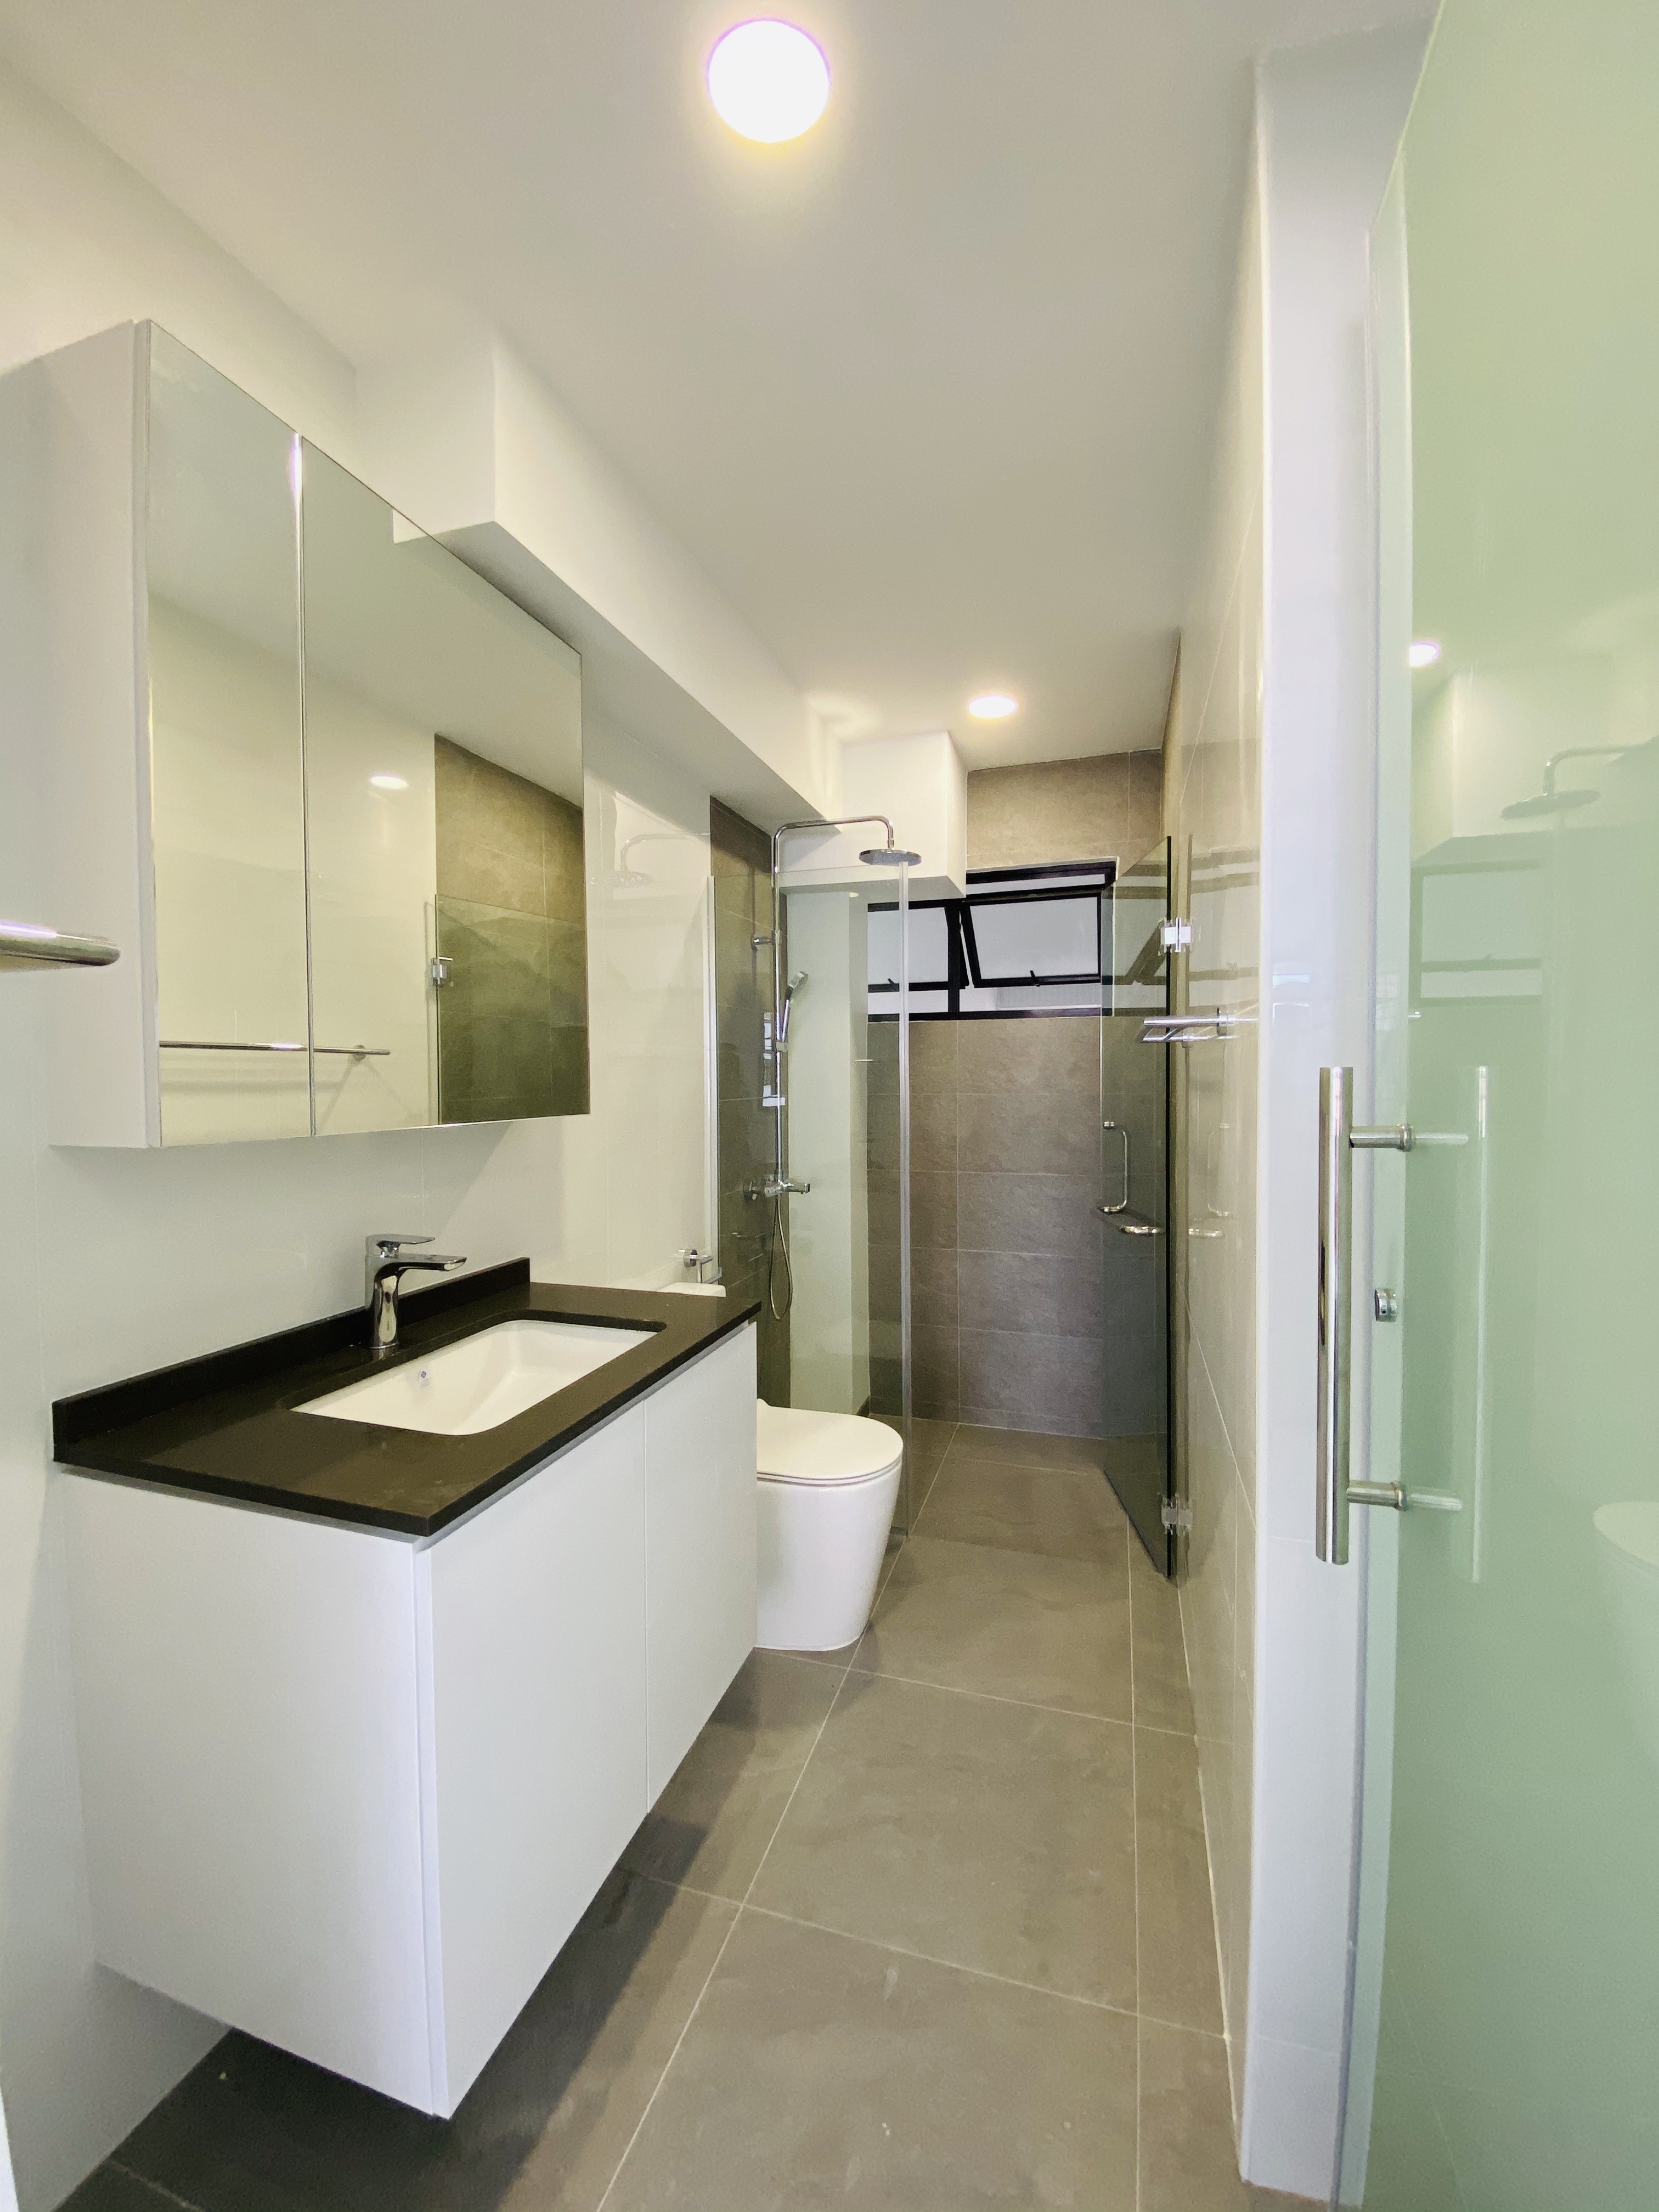 Contemporary, Minimalist, Modern Design - Bathroom - HDB Executive Apartment - Design by Weldas Wolfgang Pte Ltd